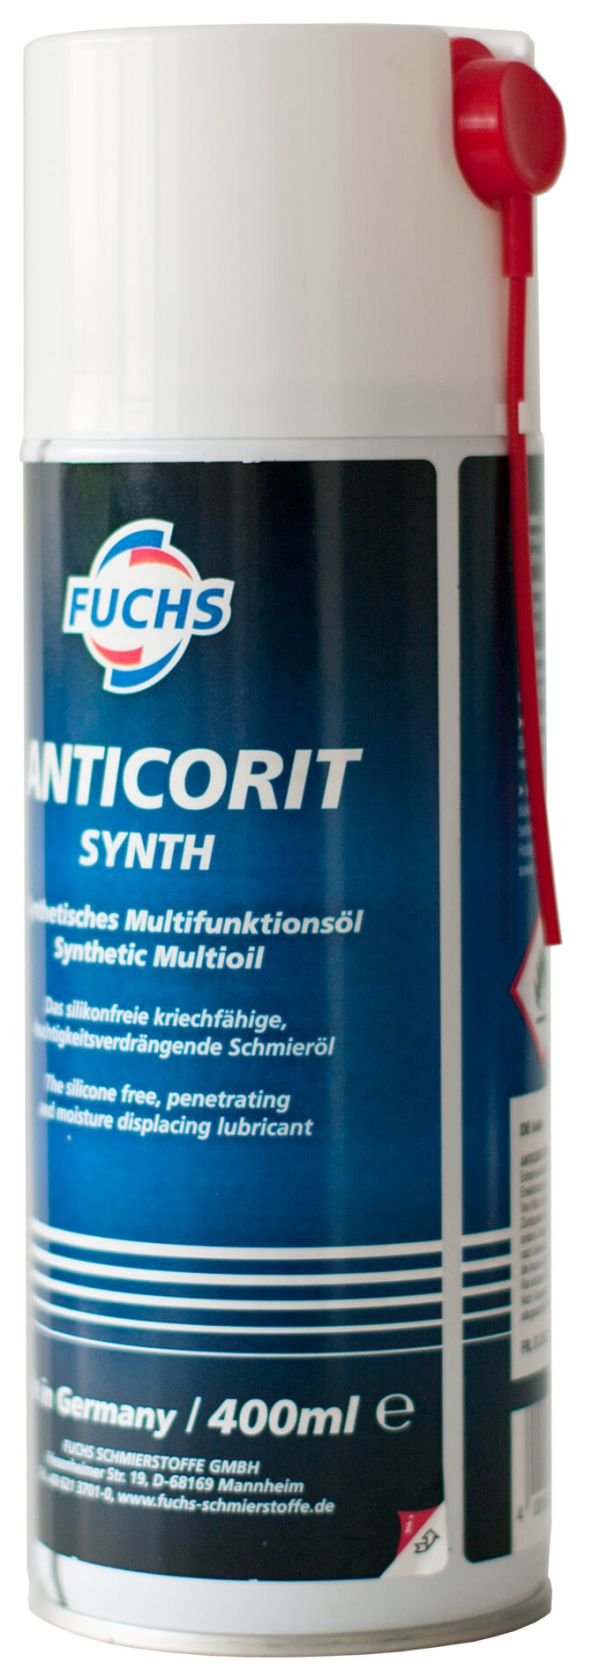 FUCHS Silikolene Universalölspray Anticorit Synth 400ml Dose von Fuchs